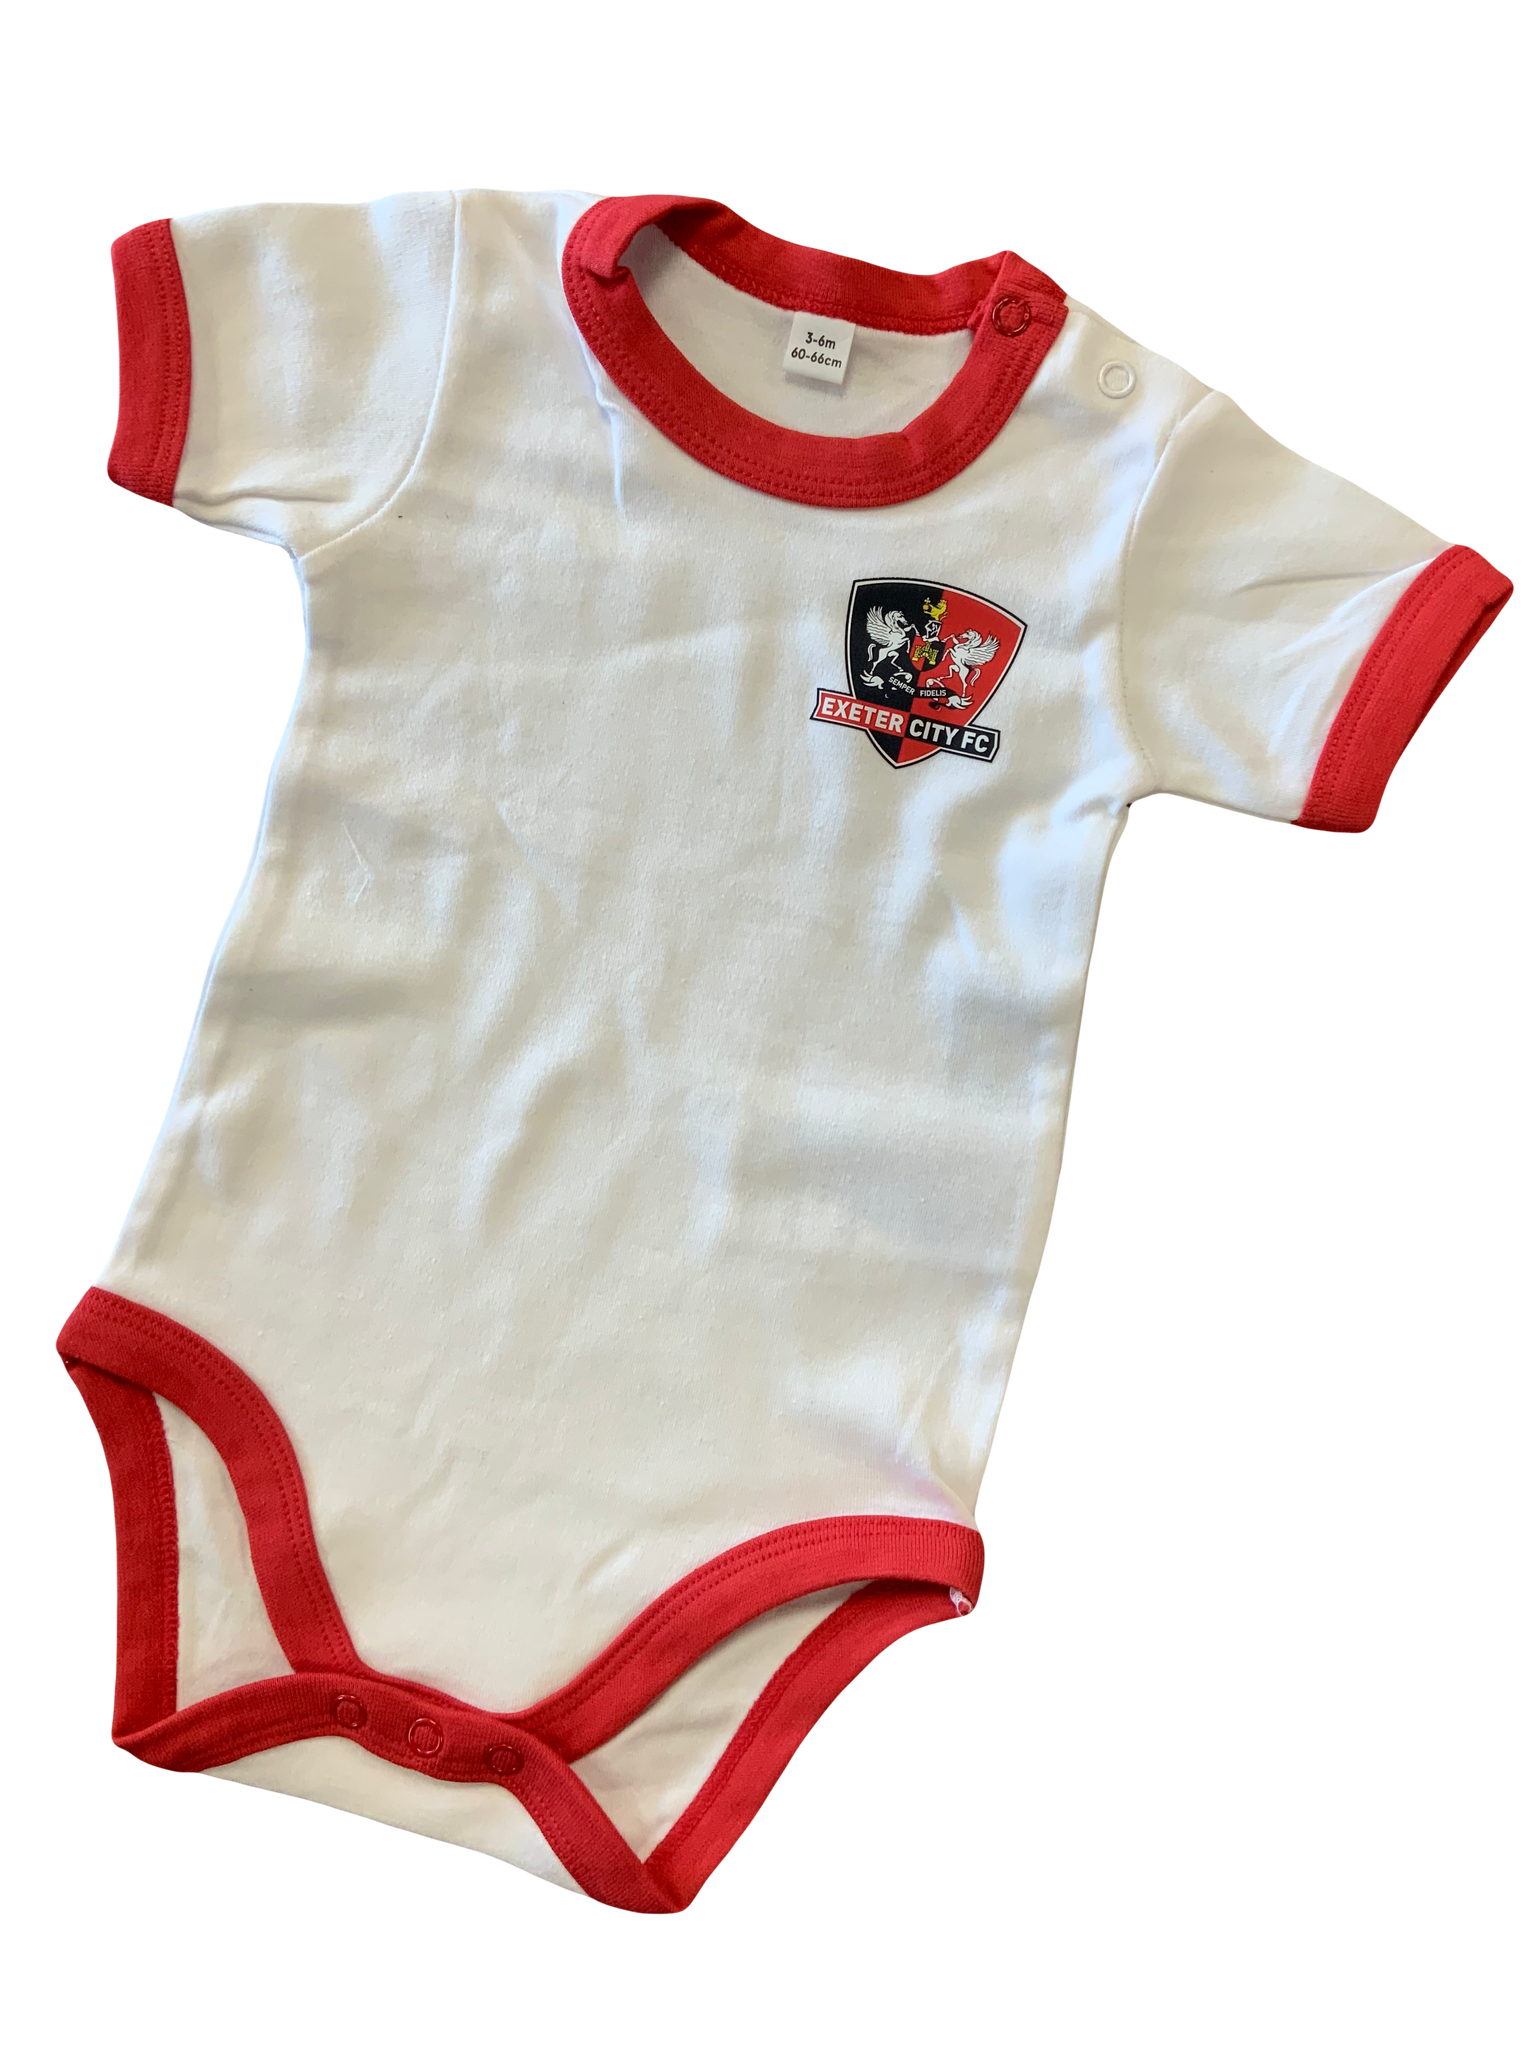 ECFC Baby Bodysuit - WHITE & RED